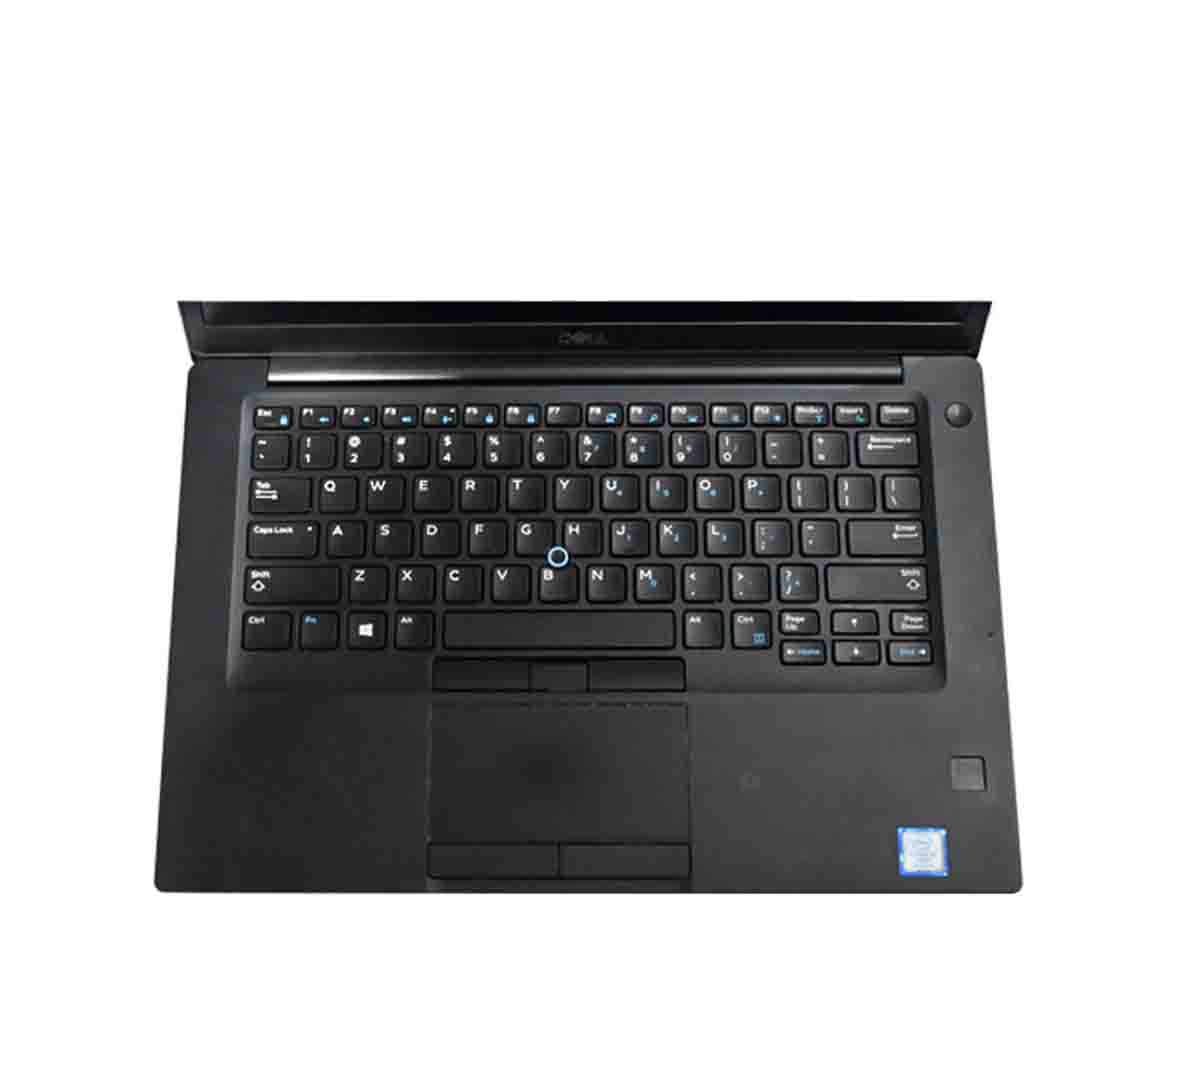 Dell Latitude 7490 Business Laptop, Intel Core i5-7th Gen CPU, 8GB RAM, 256GB SSD, 14.1 inch Display, Windows 10 Pro, Refurbished Laptop